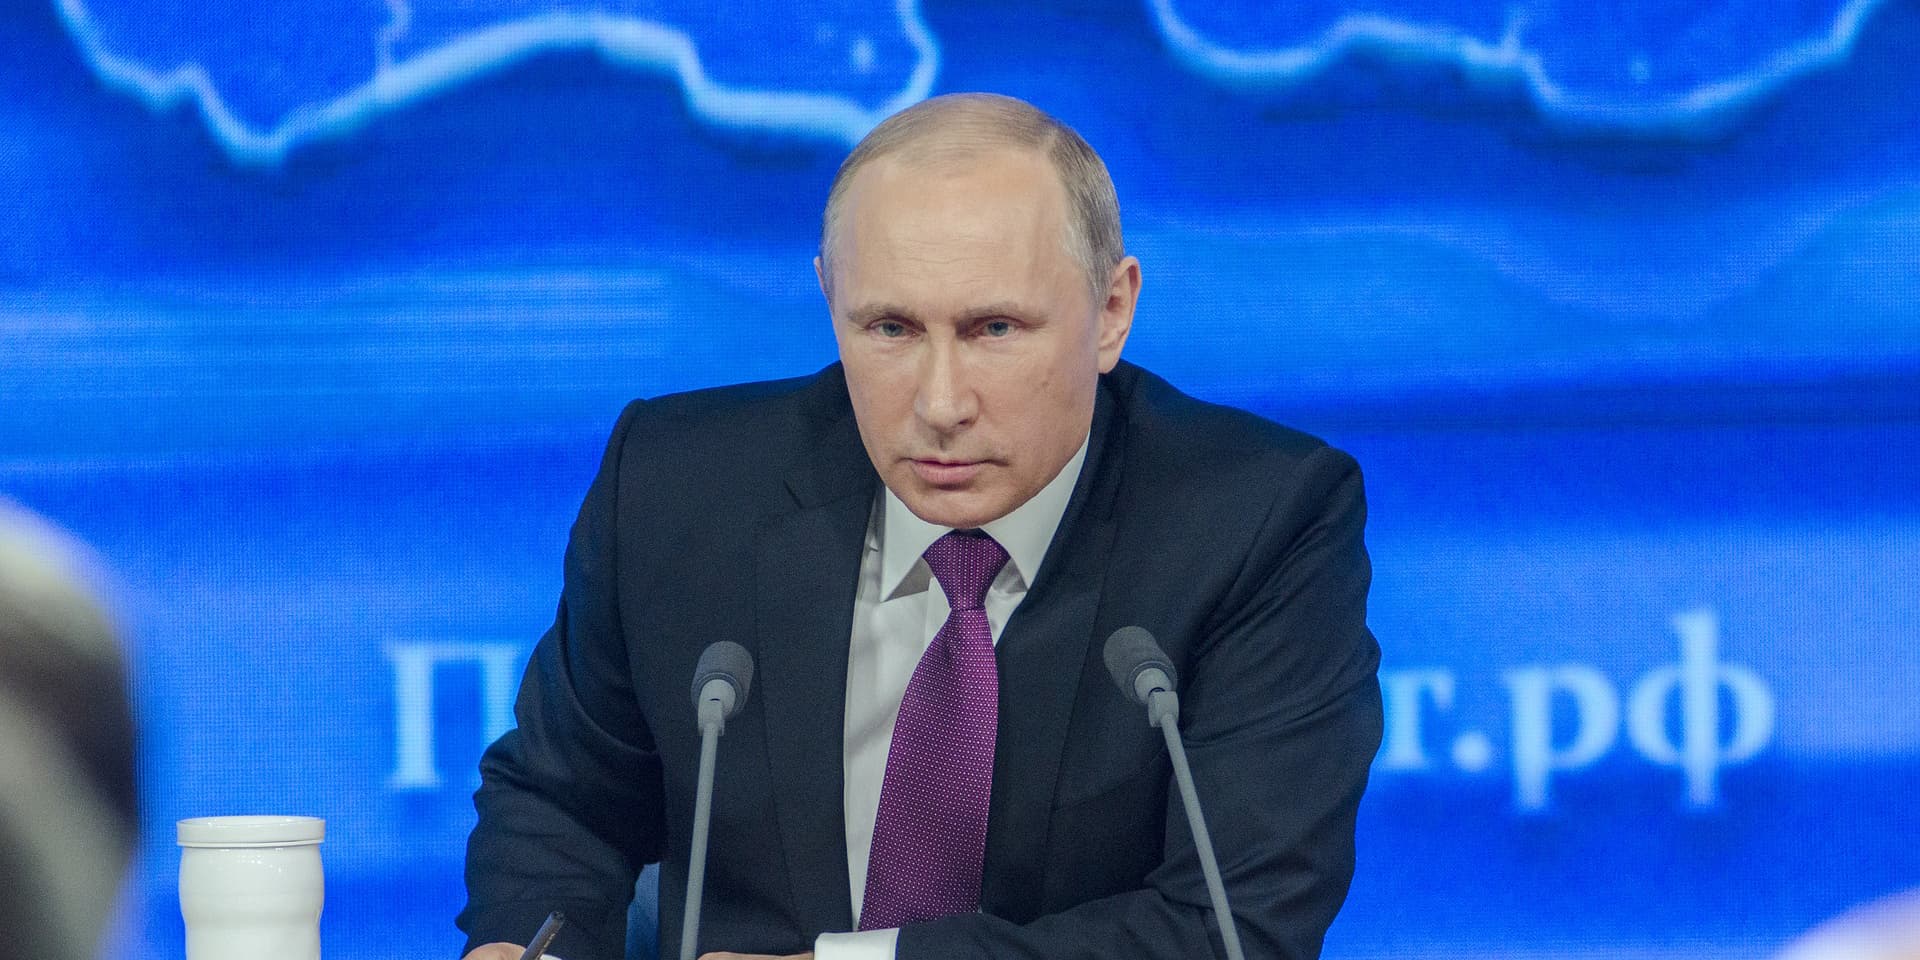 Russian President, Vladimir Putin